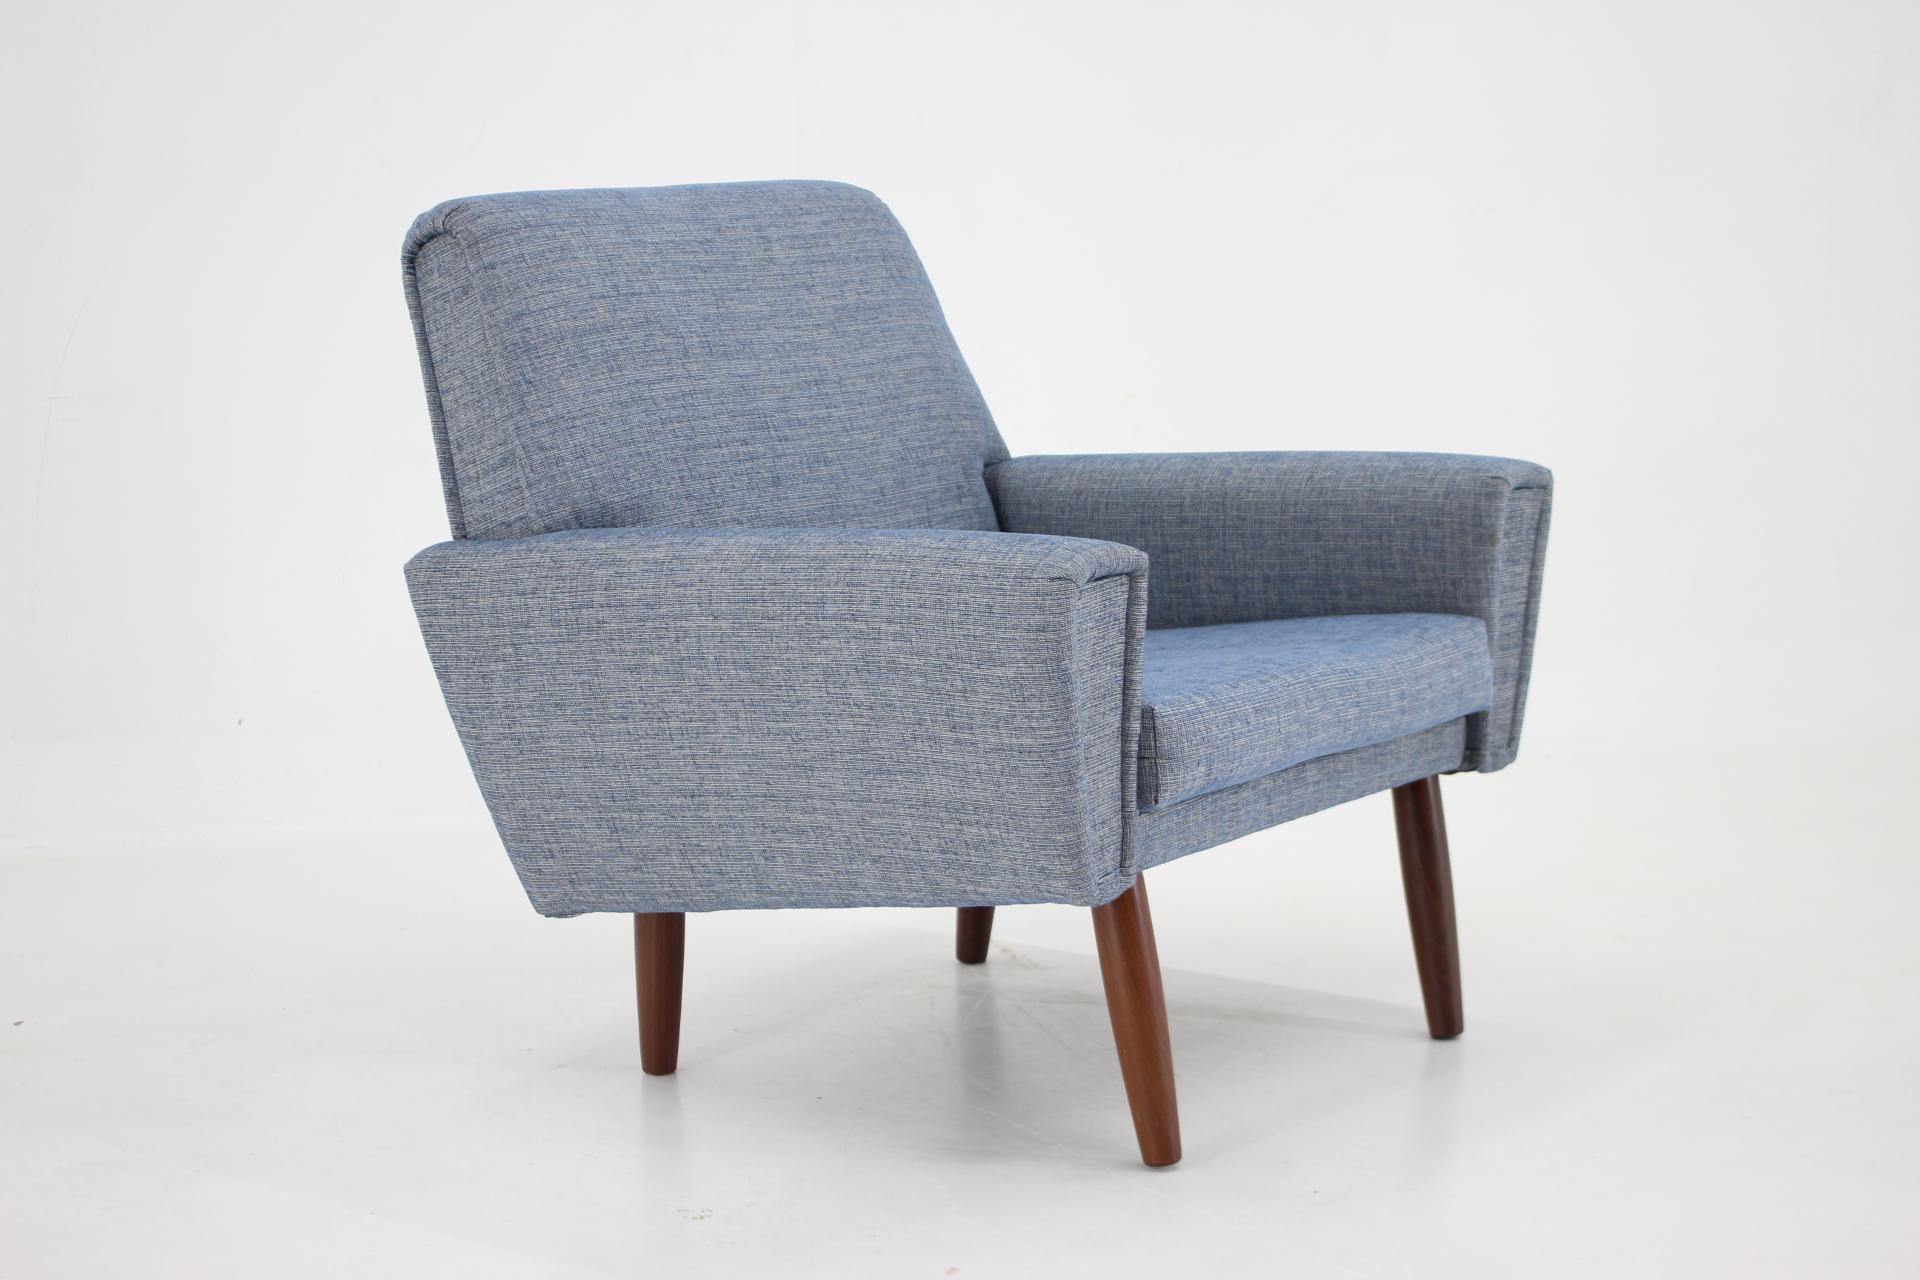 - 1960s Danish Teak Armchair
- Newly upholstered 